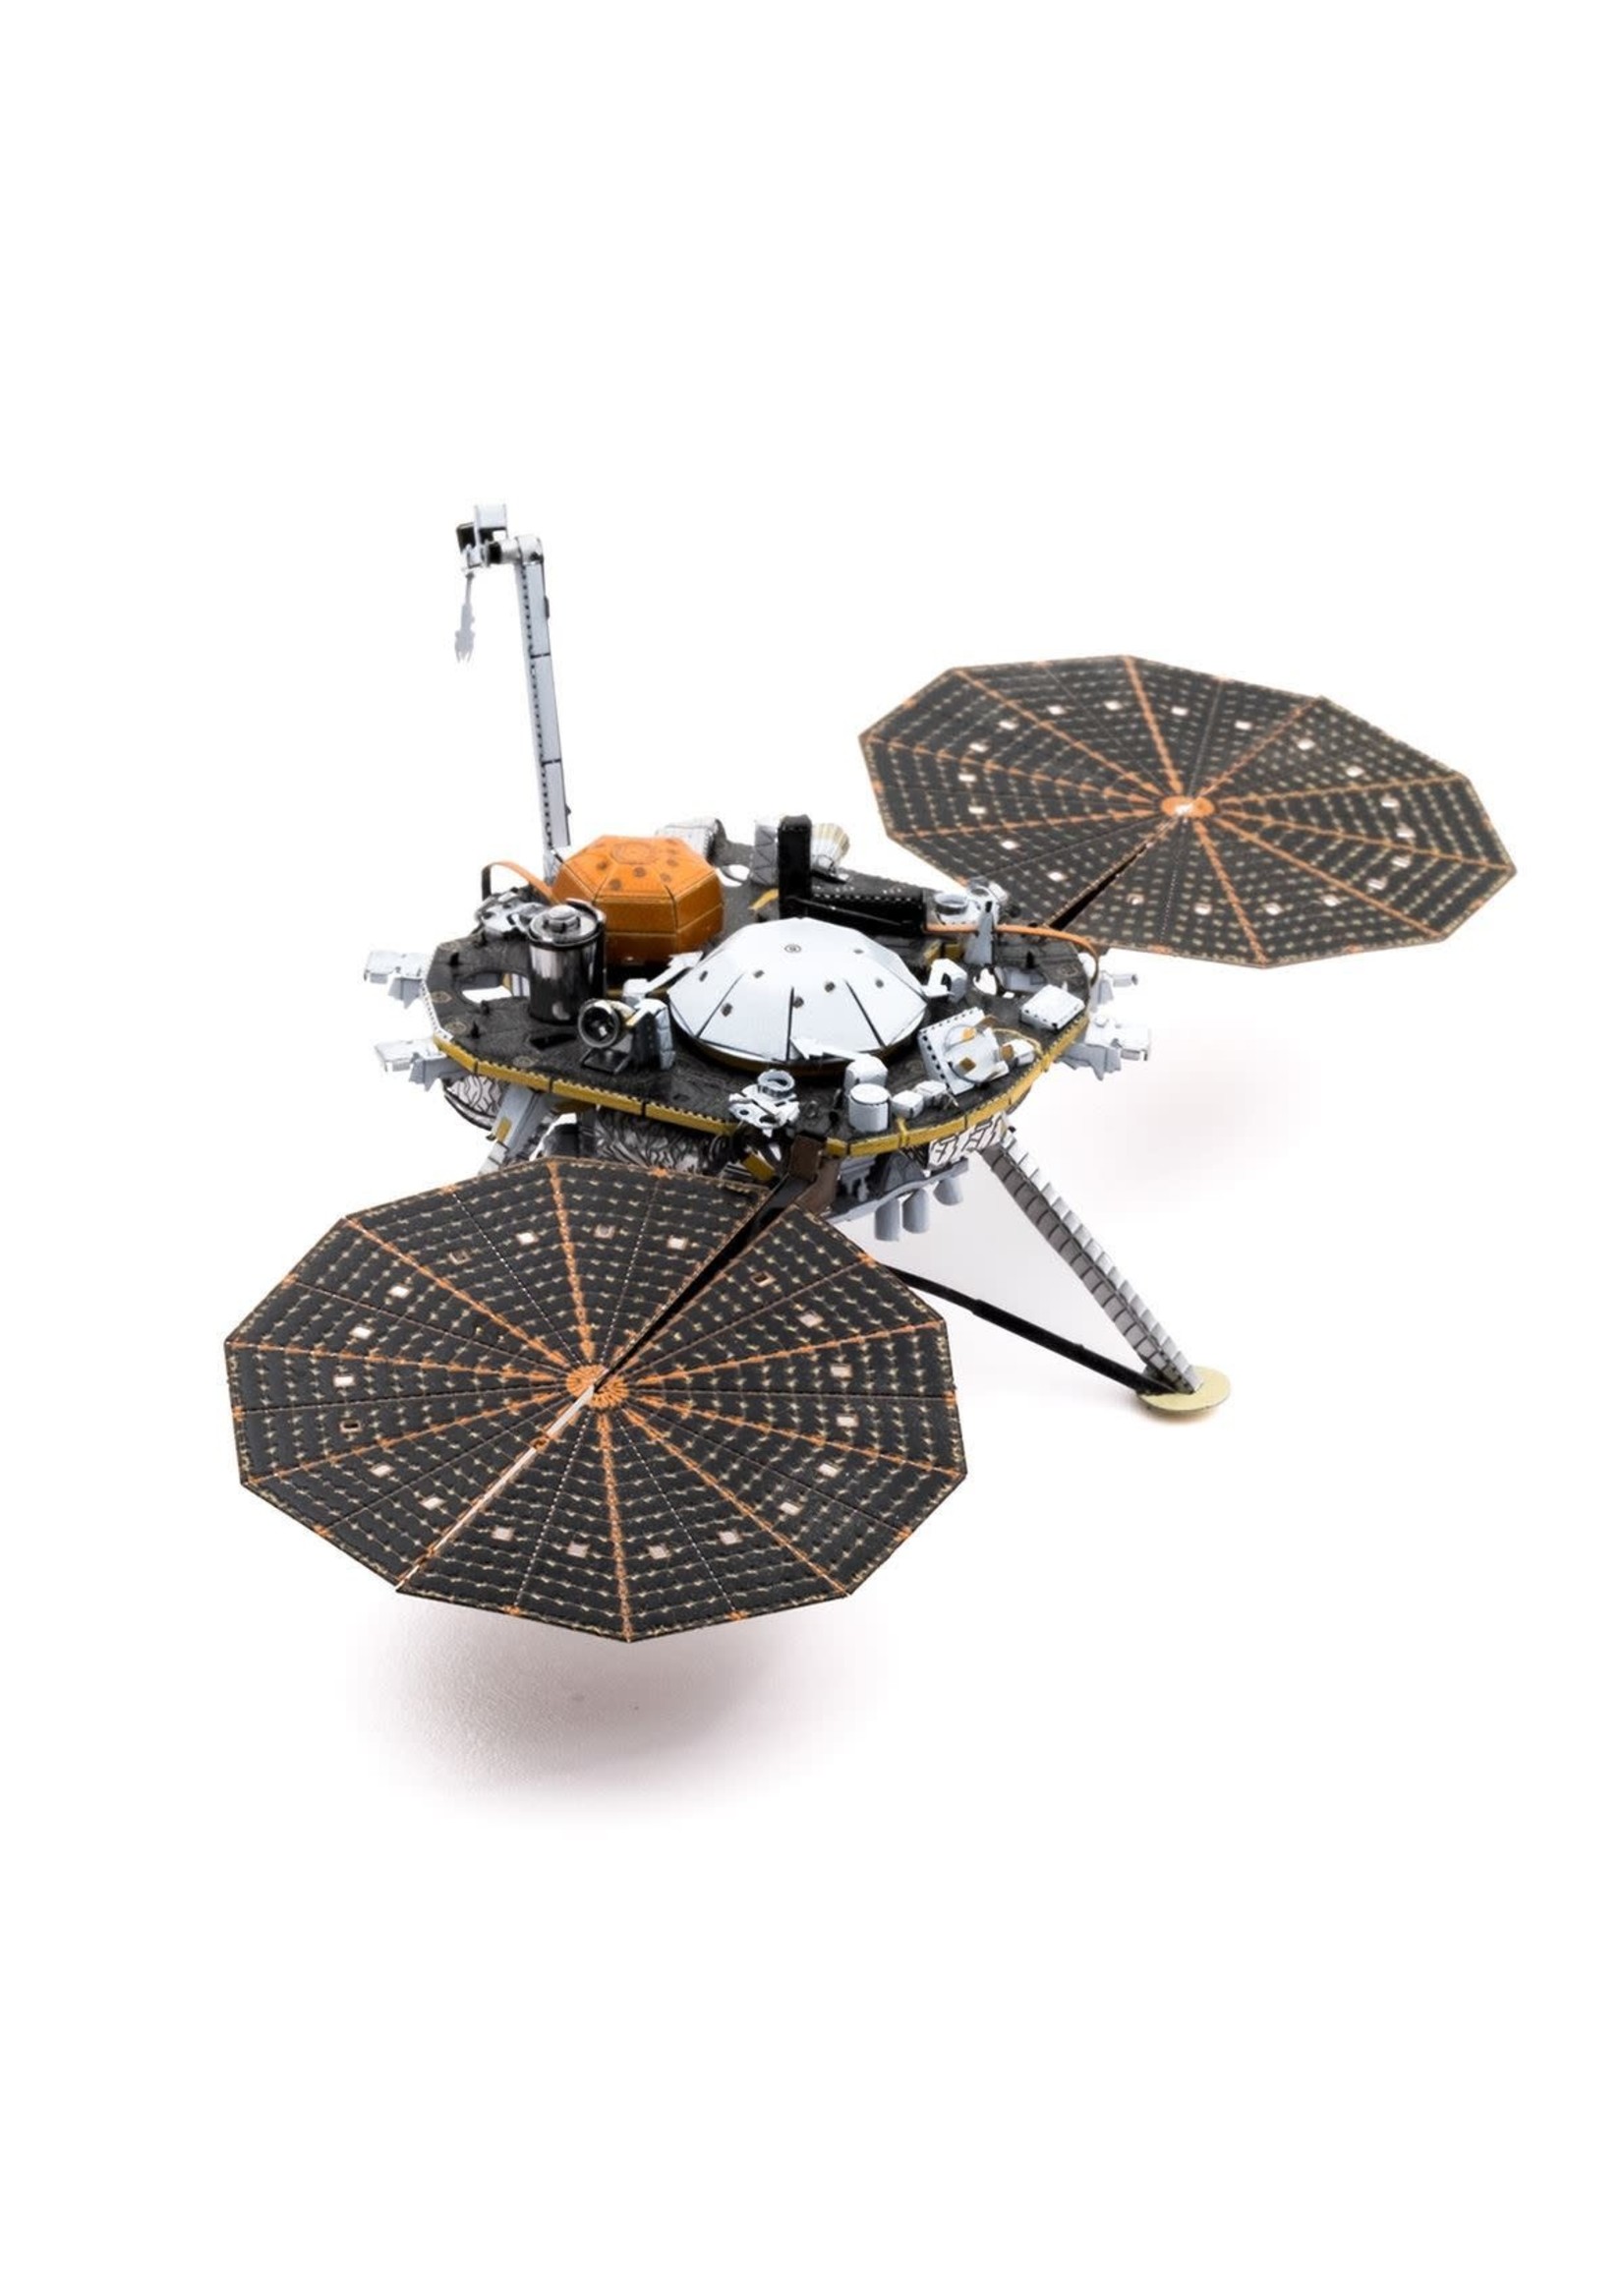 MetalWorks Insight Mars Lander